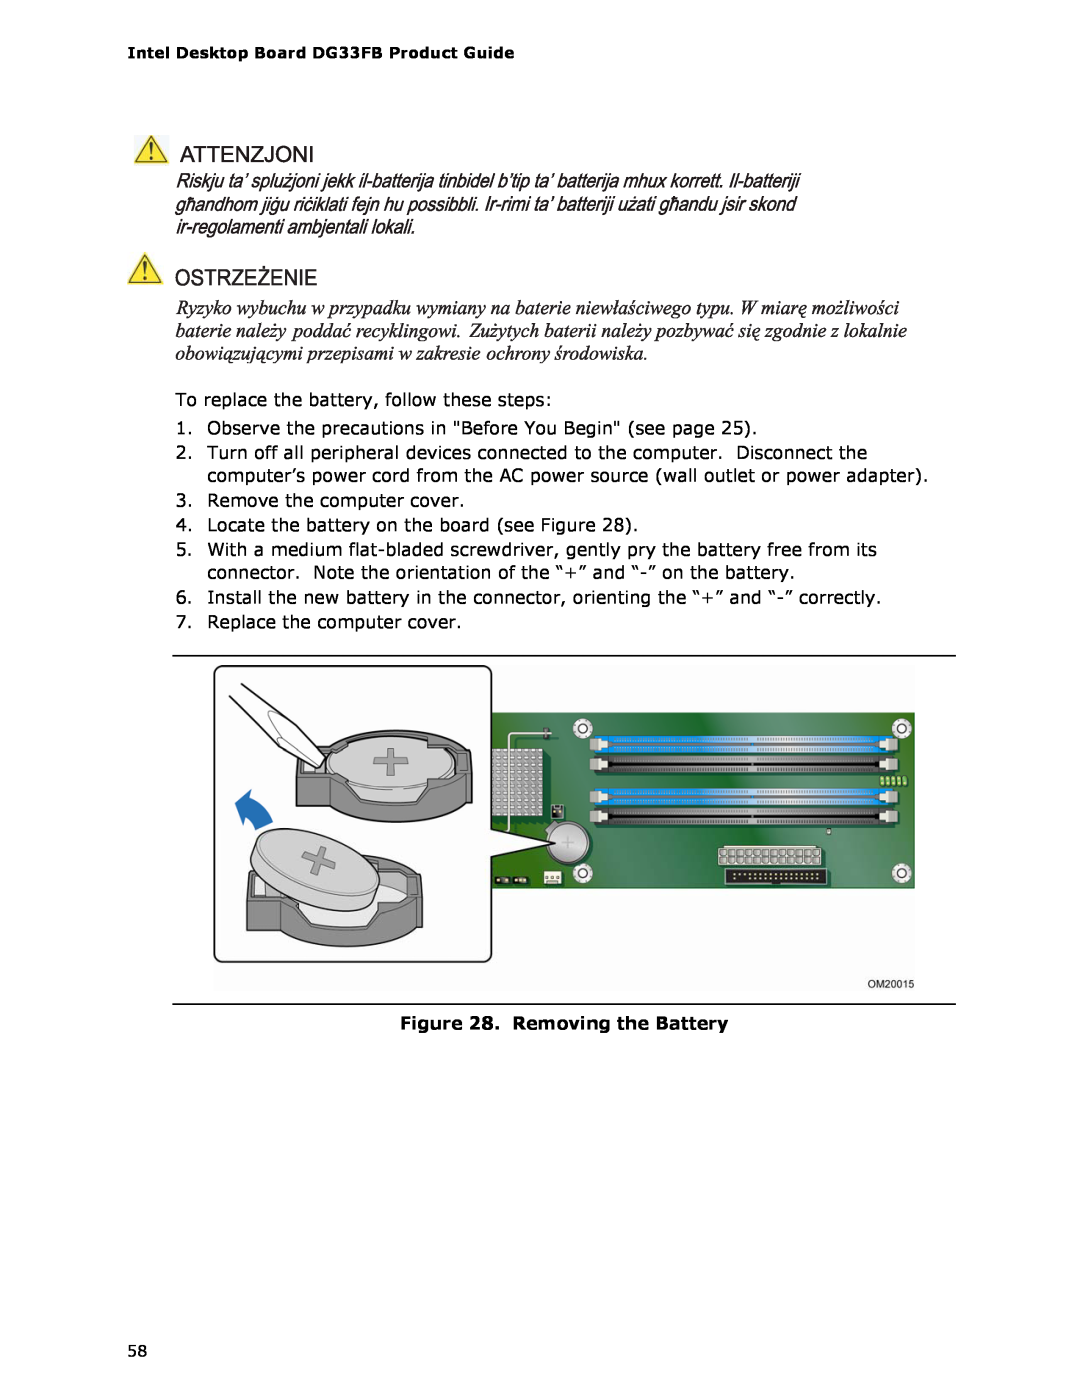 Intel DG33FB manual Removing the Battery 